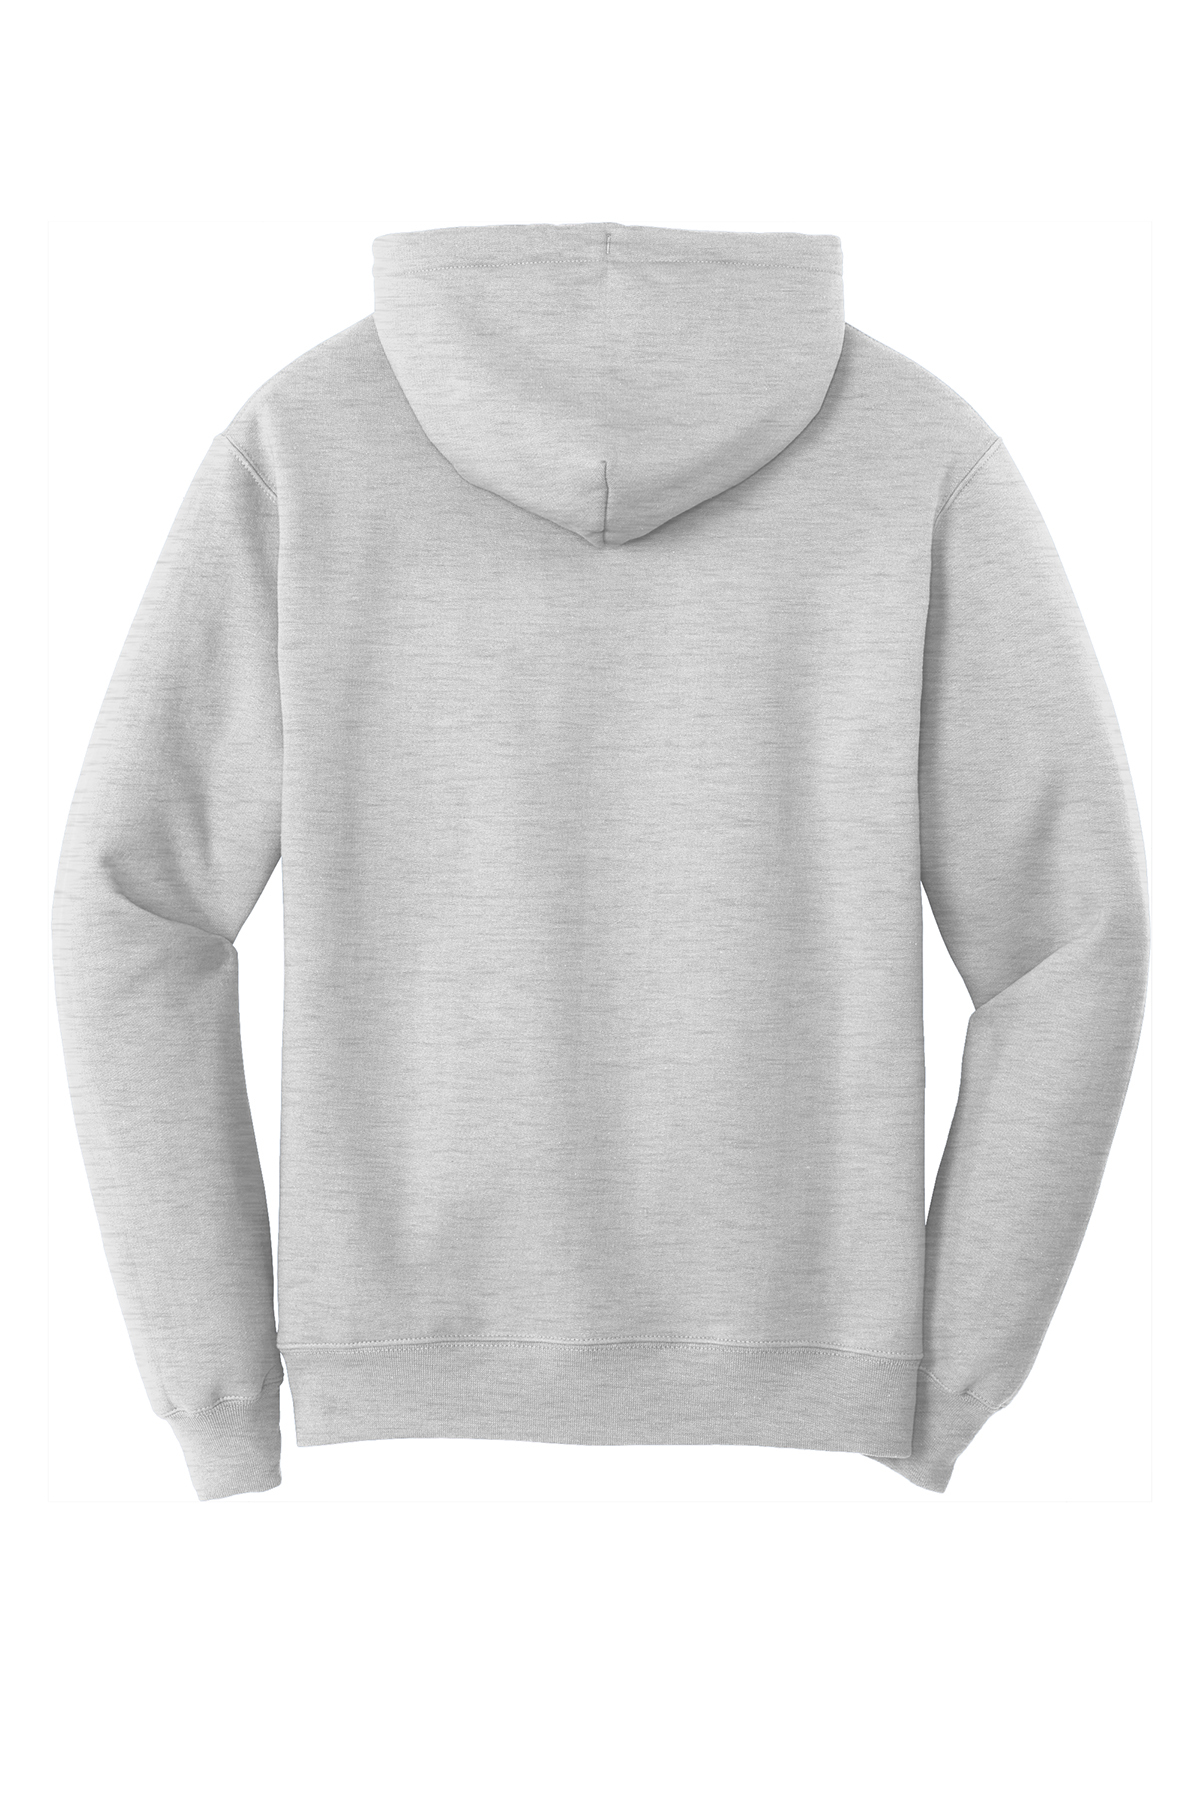 Port & Company Core Fleece Pullover Hooded Sweatshirt | Product | Port ...